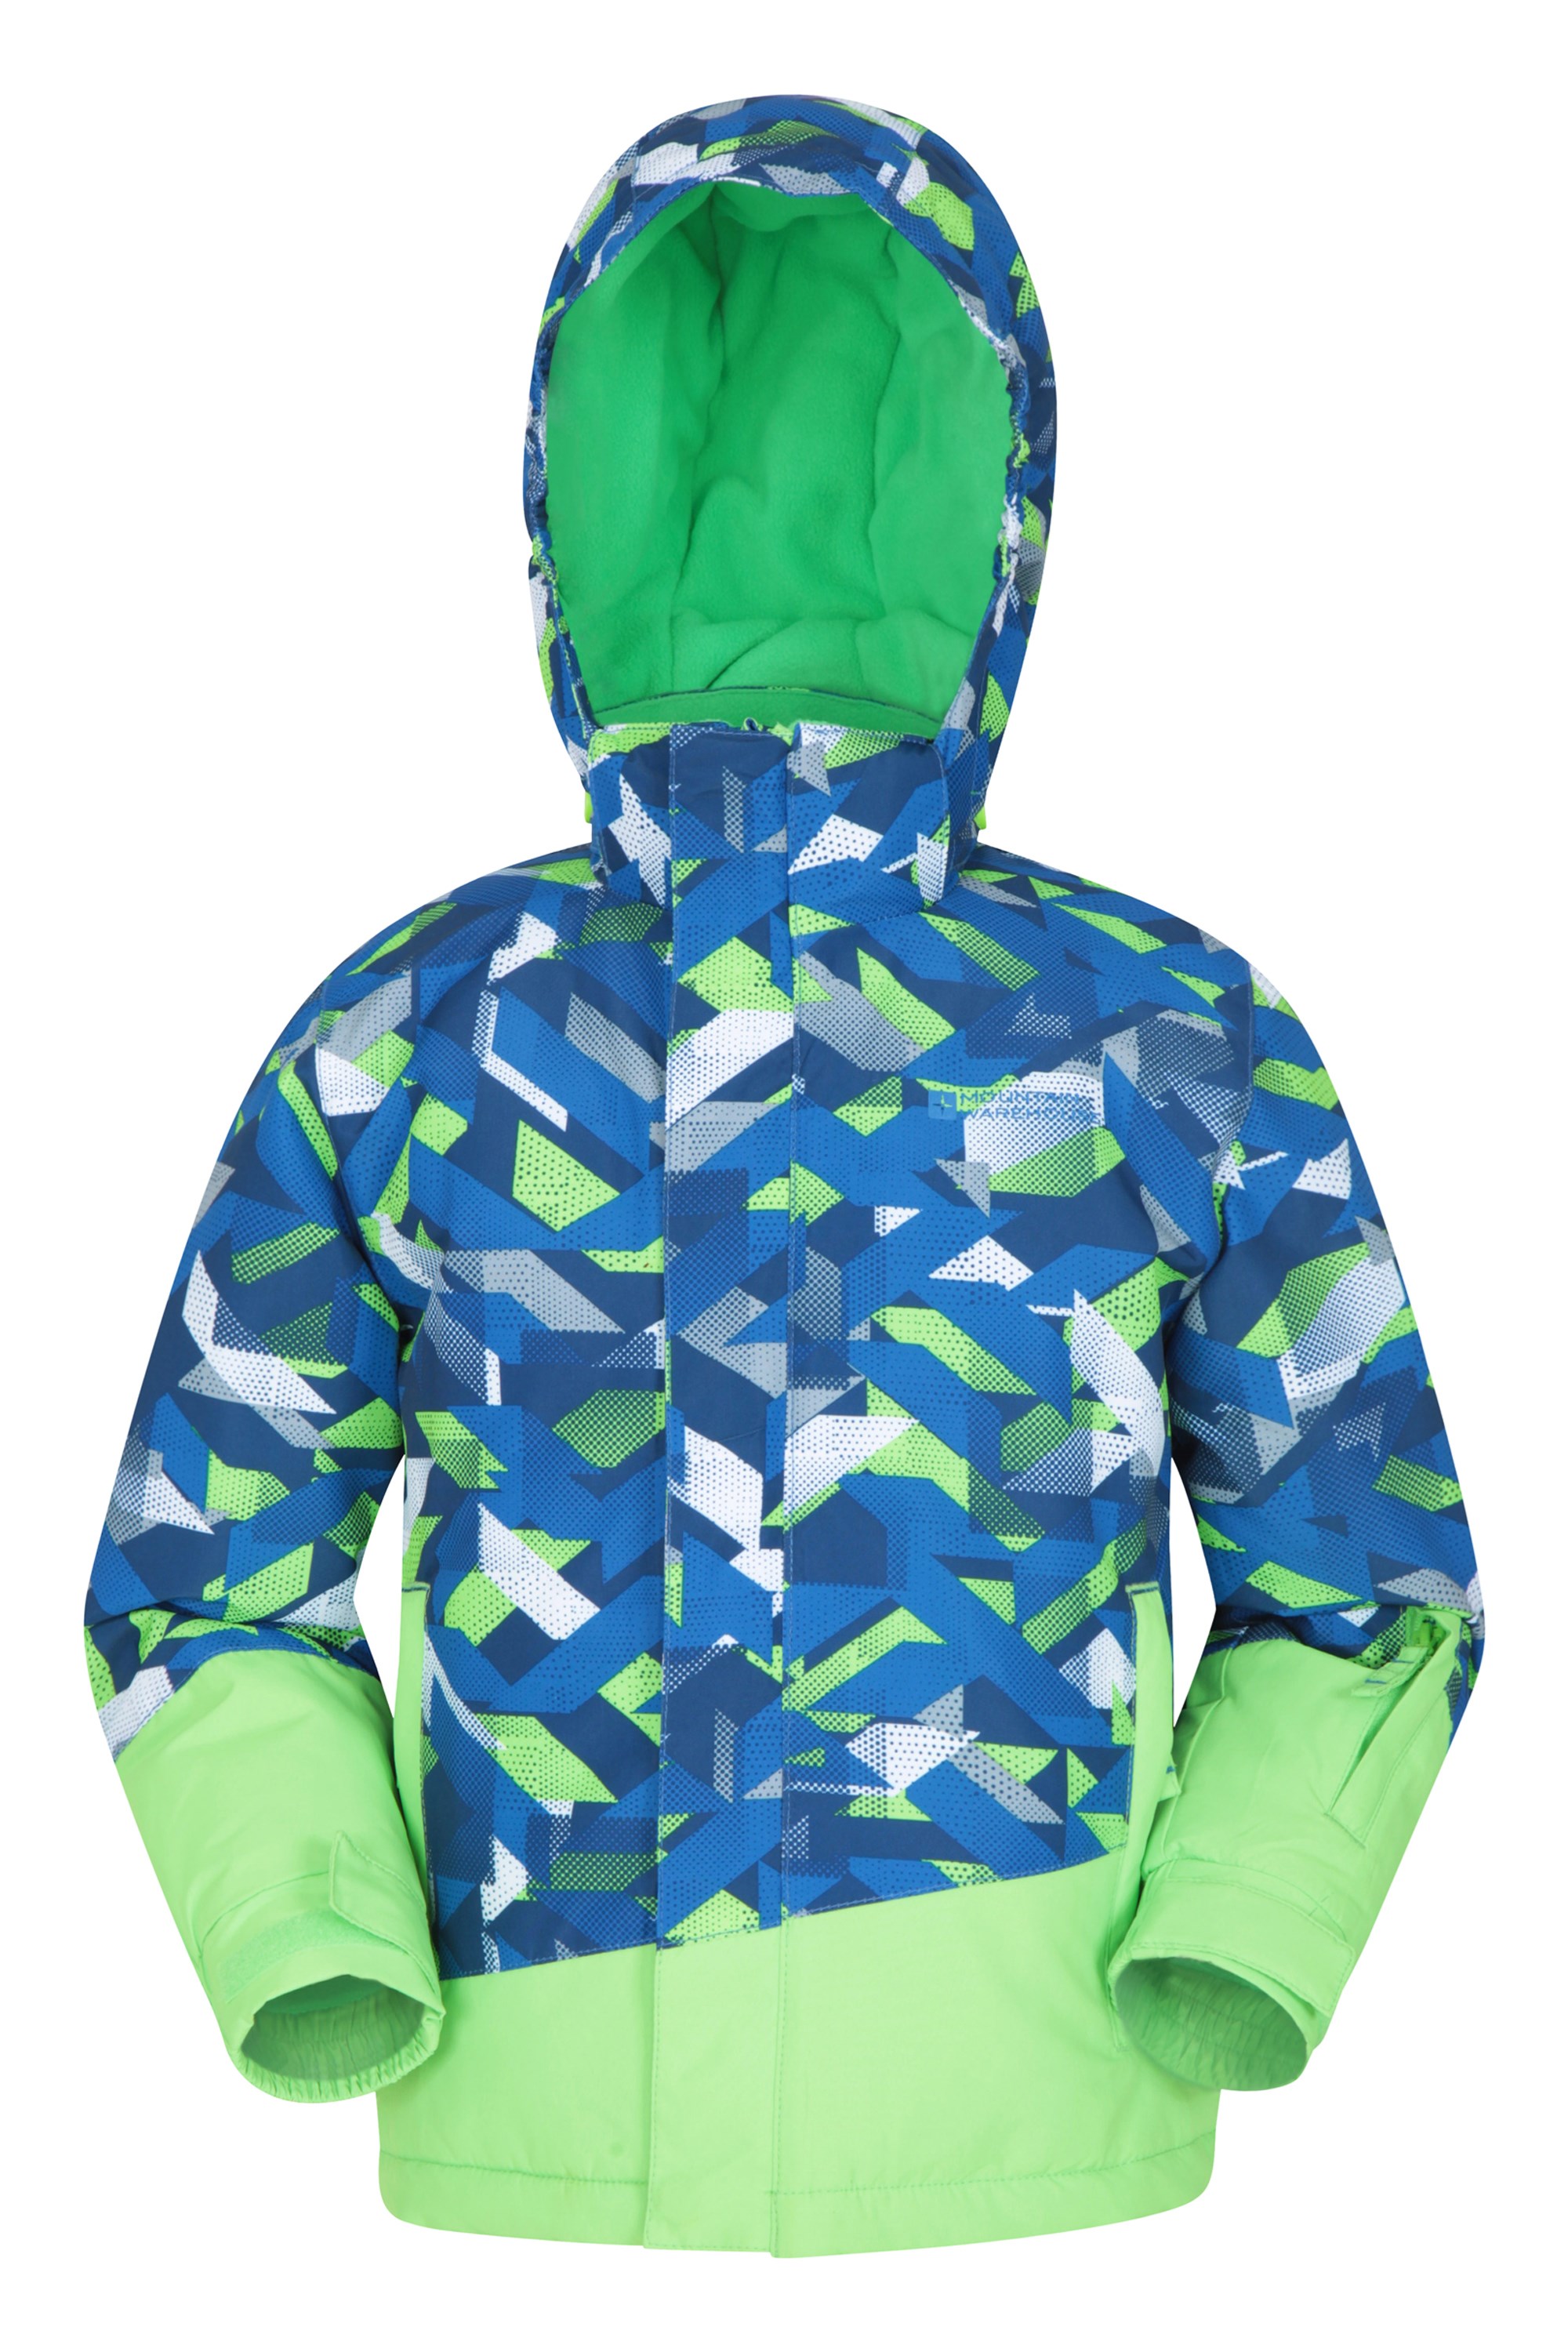 Blade Printed Kids Ski Jacket | Mountain Warehouse GB